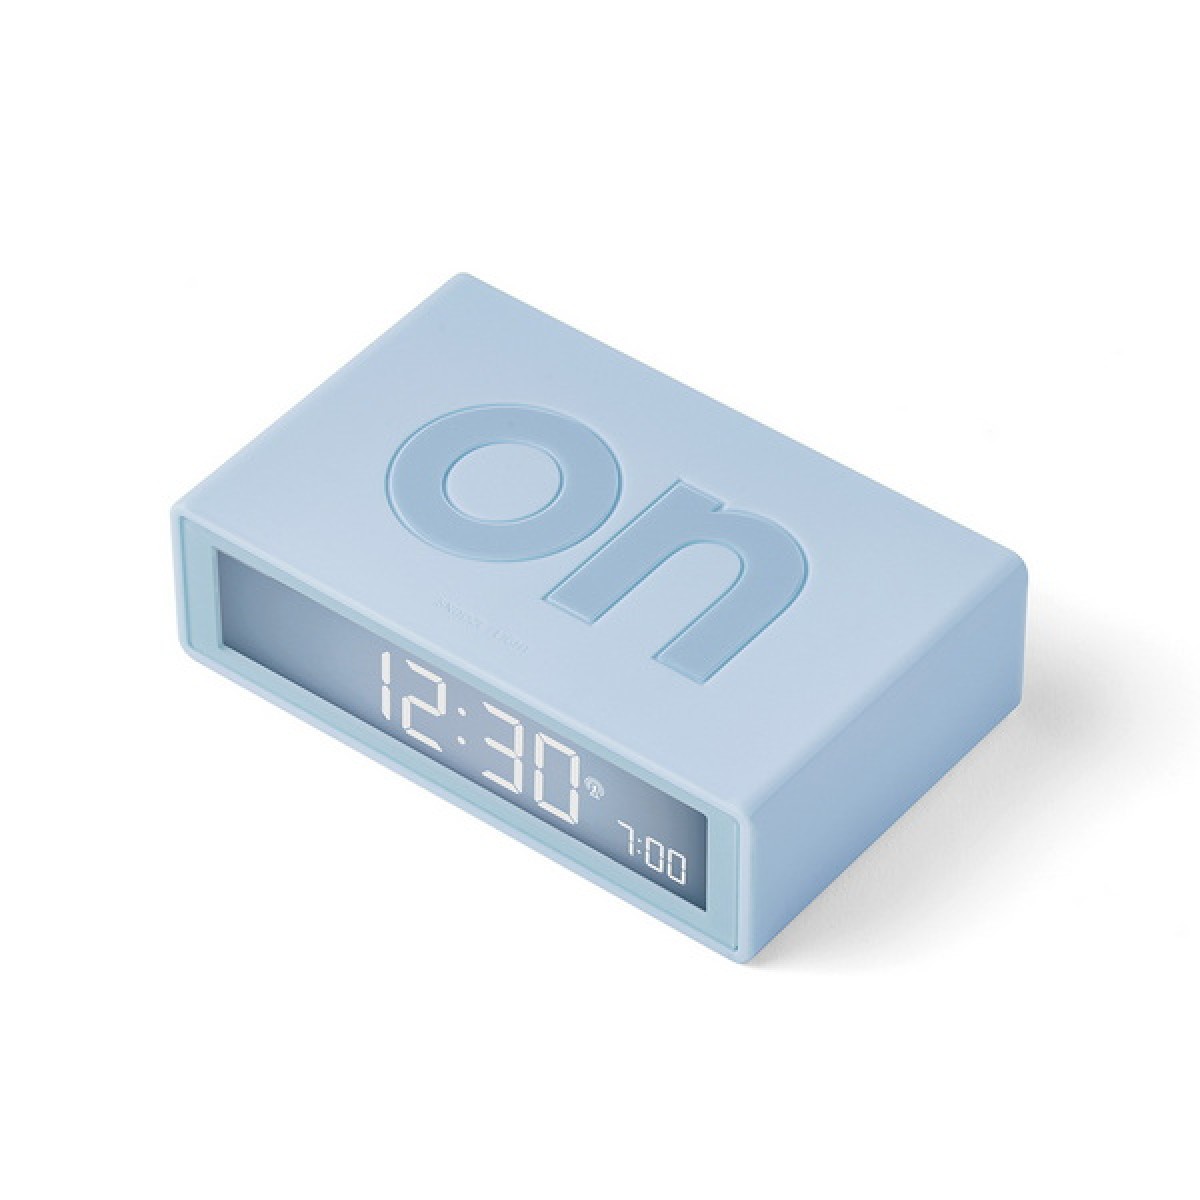 Lexon - Flip - Reversible LCD alarm clock - Light Blue